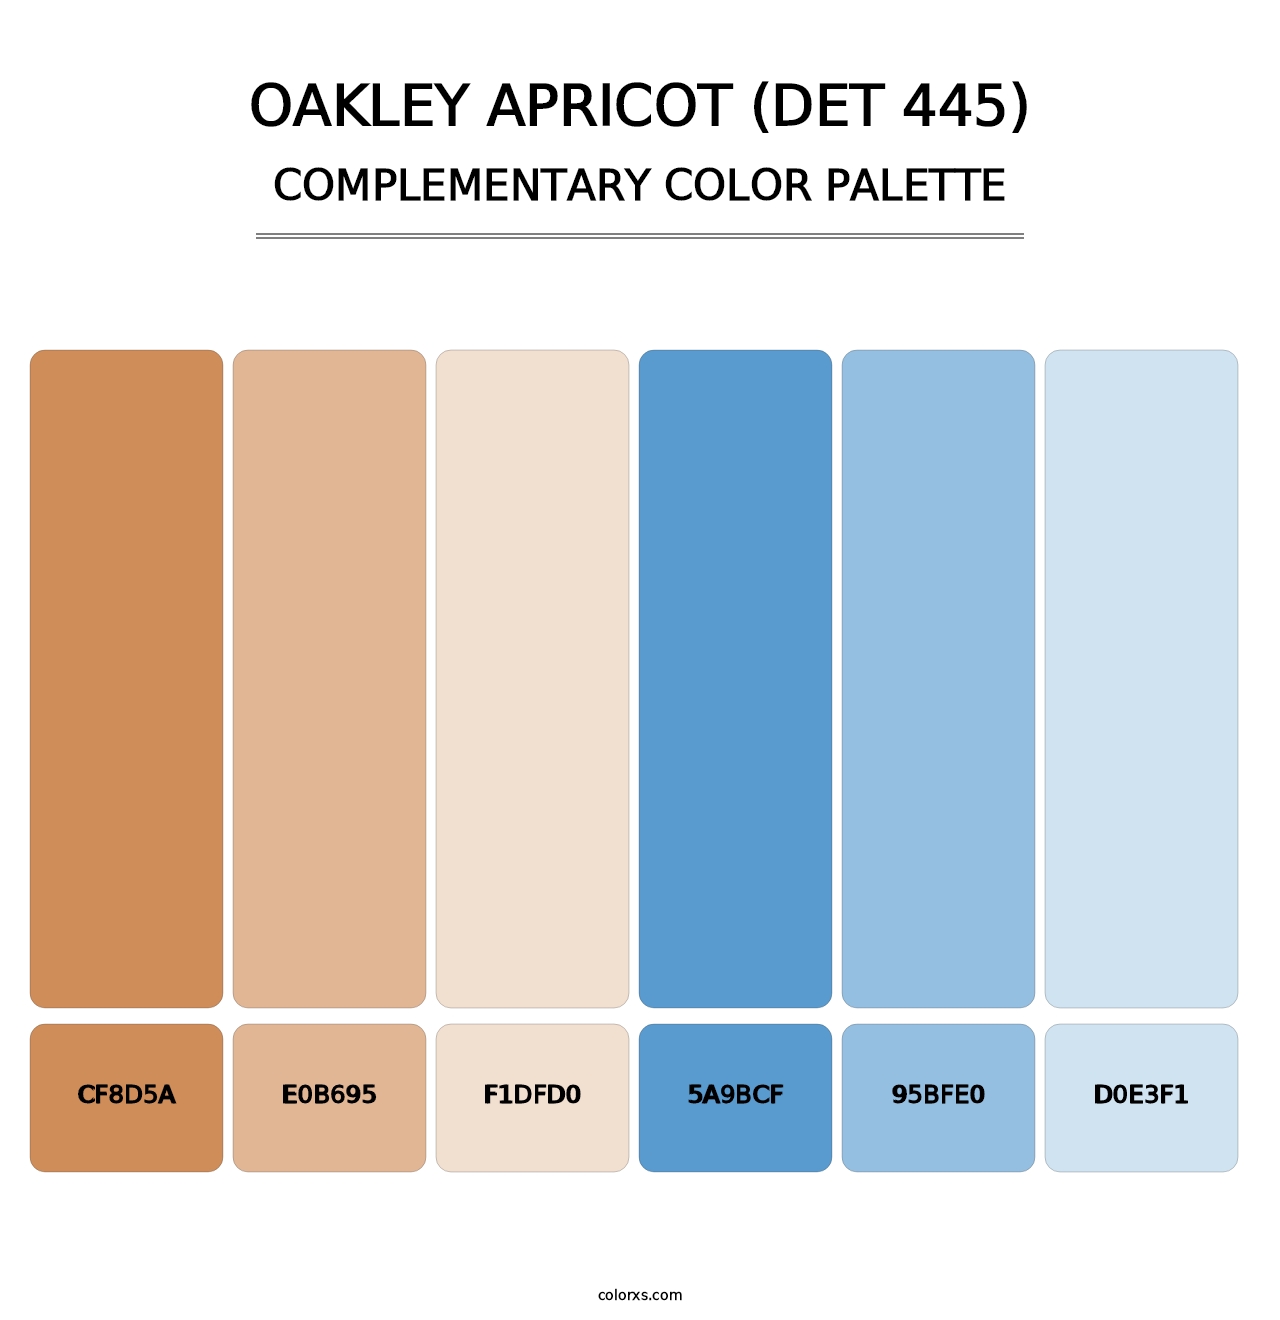 Oakley Apricot (DET 445) - Complementary Color Palette